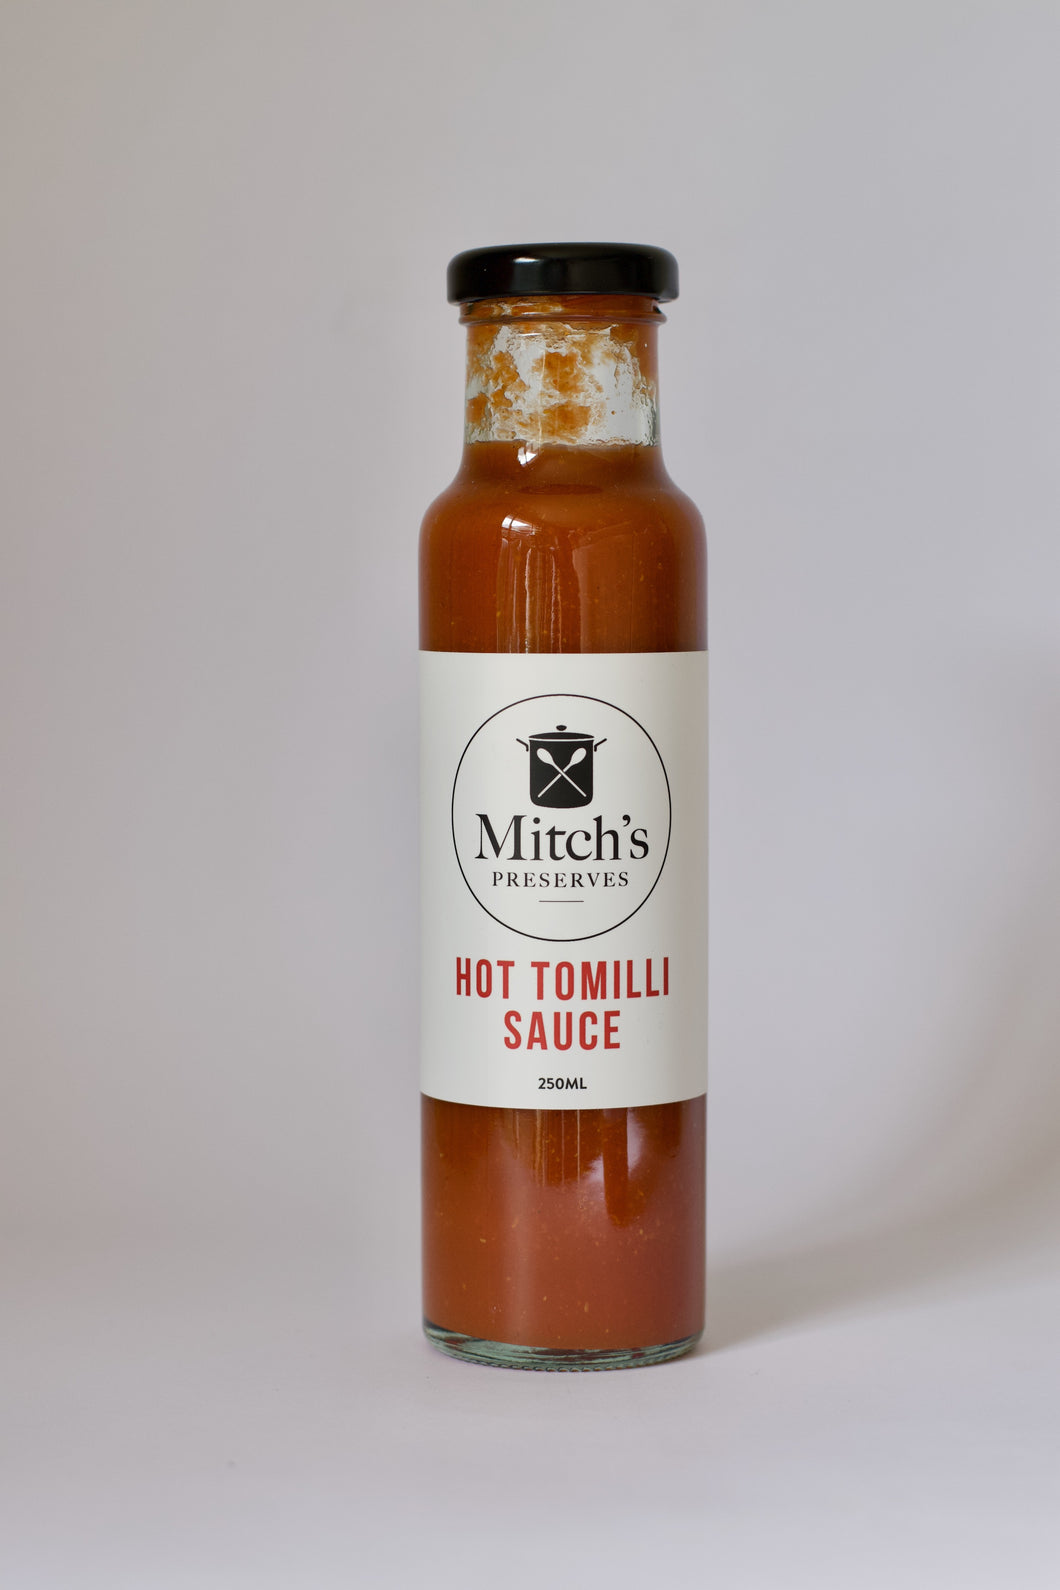 Hot Tomilli Sauce